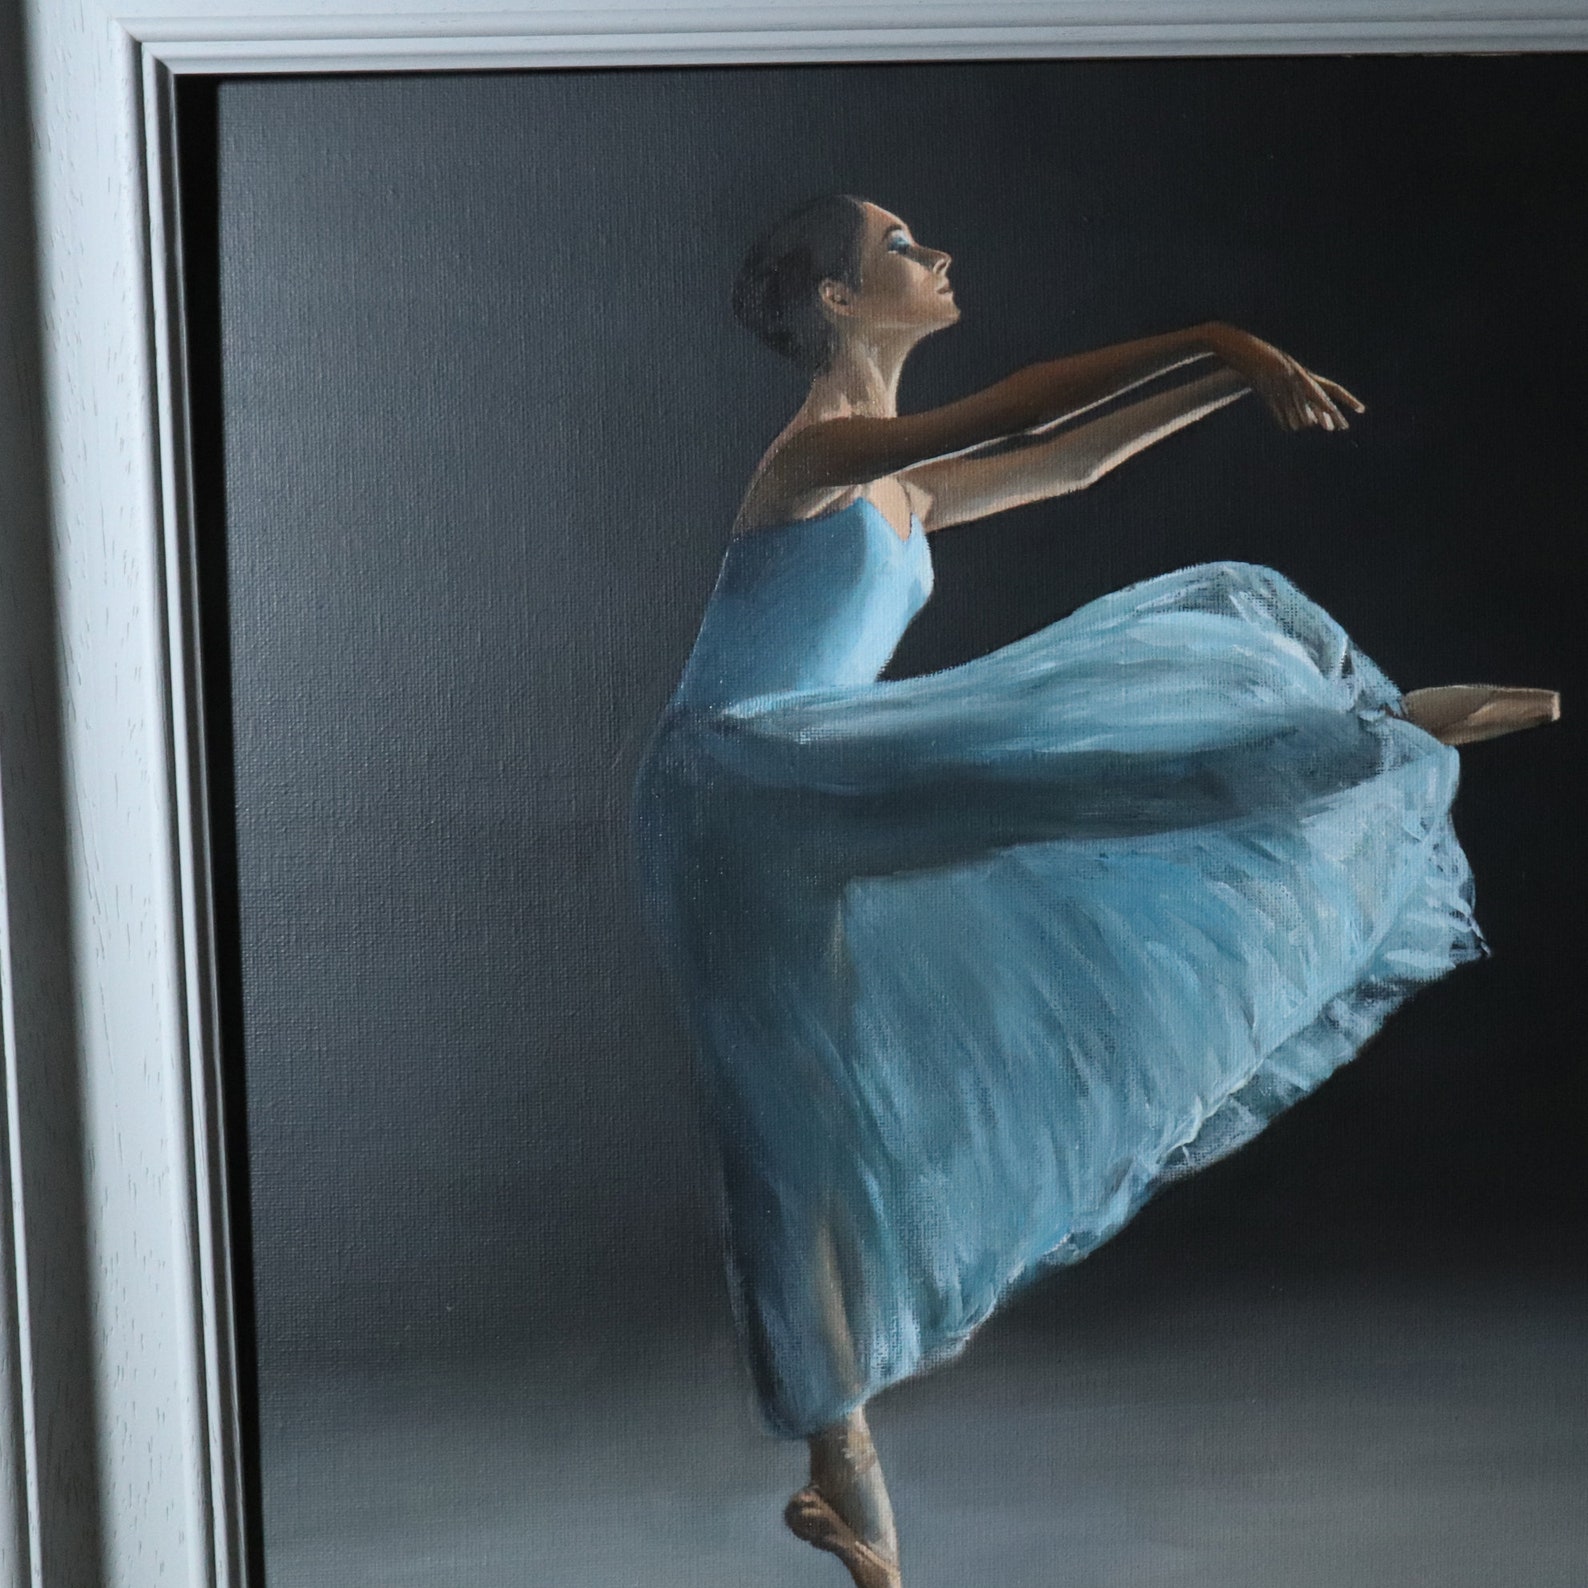 movement, portrait of a dancer, ballet, ballerina, young woman painting, original artwork, not print, nutcracker